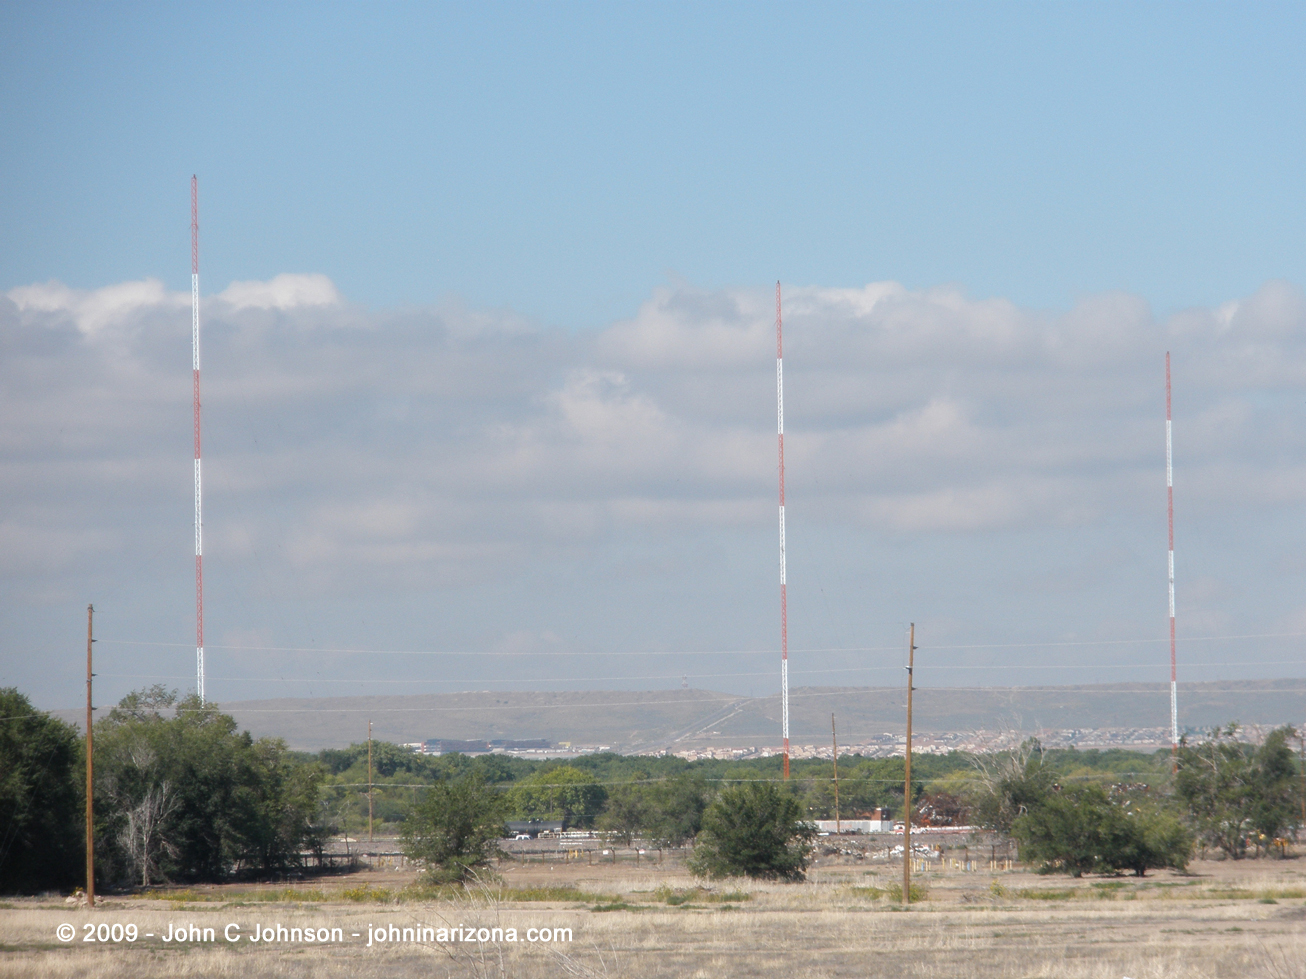 KNML Radio 610 Albuquerque, New Mexico